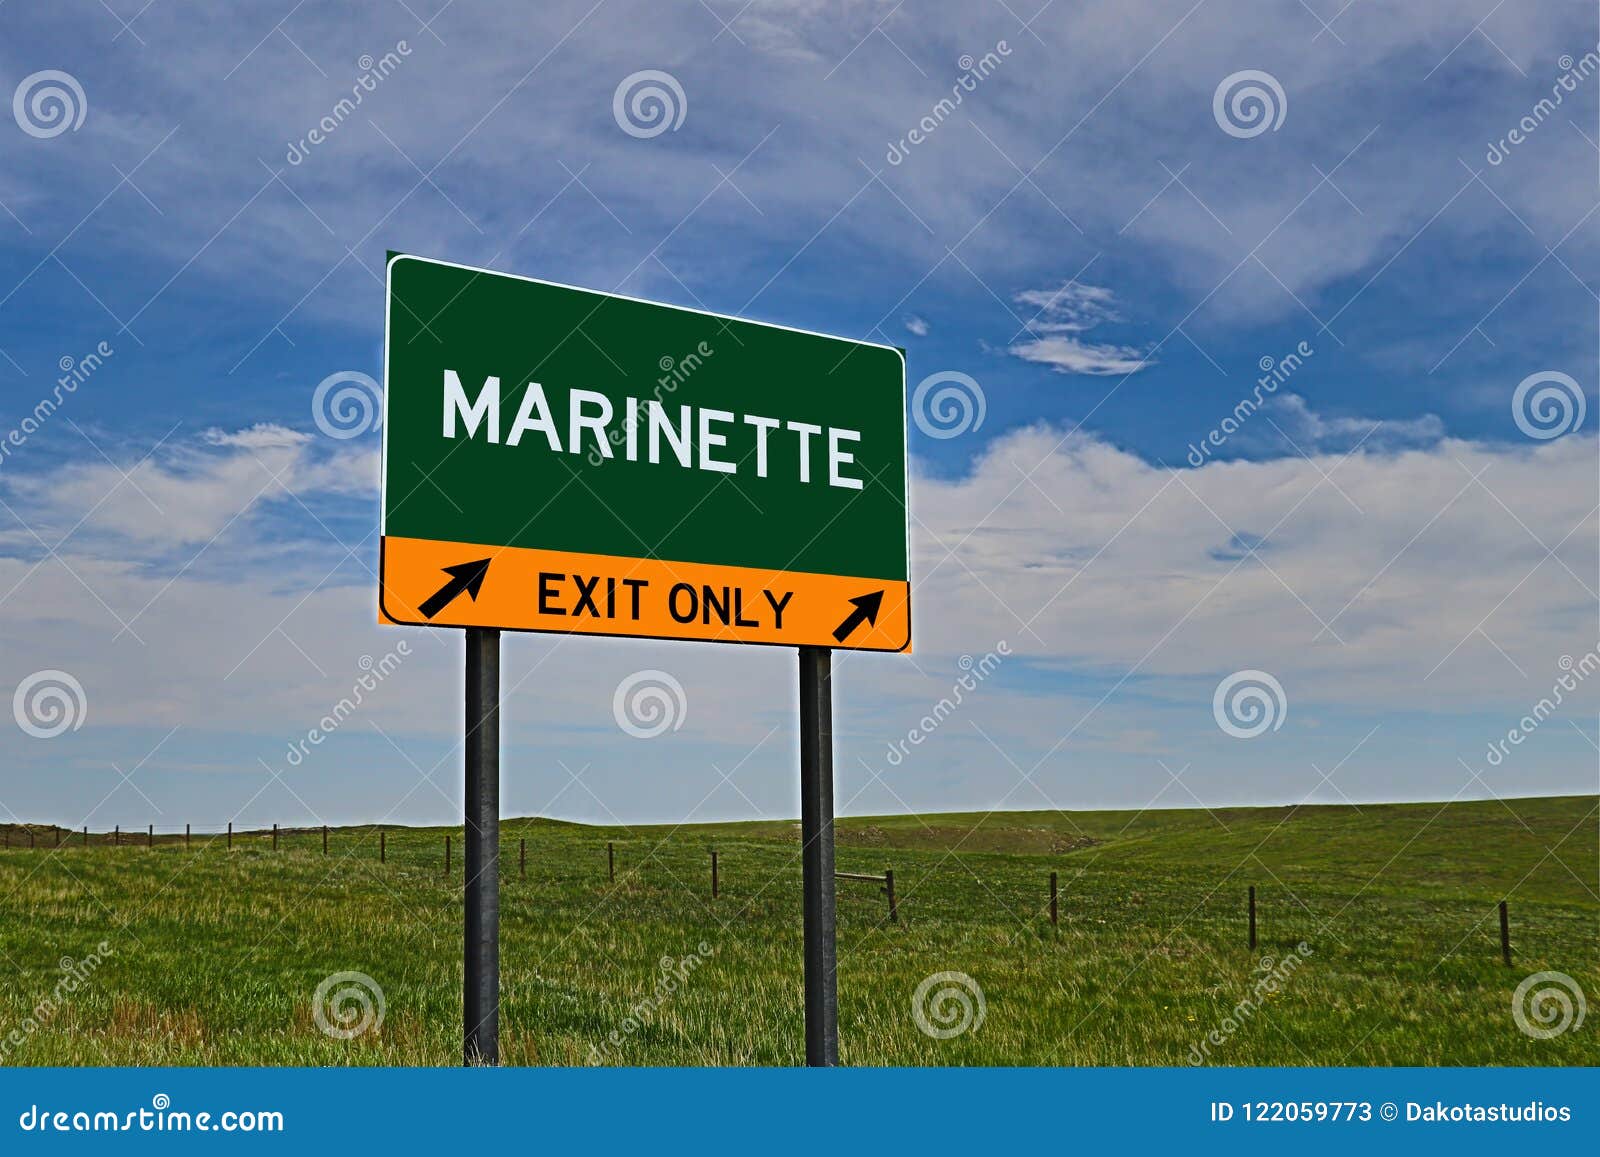 us highway exit sign for marinette